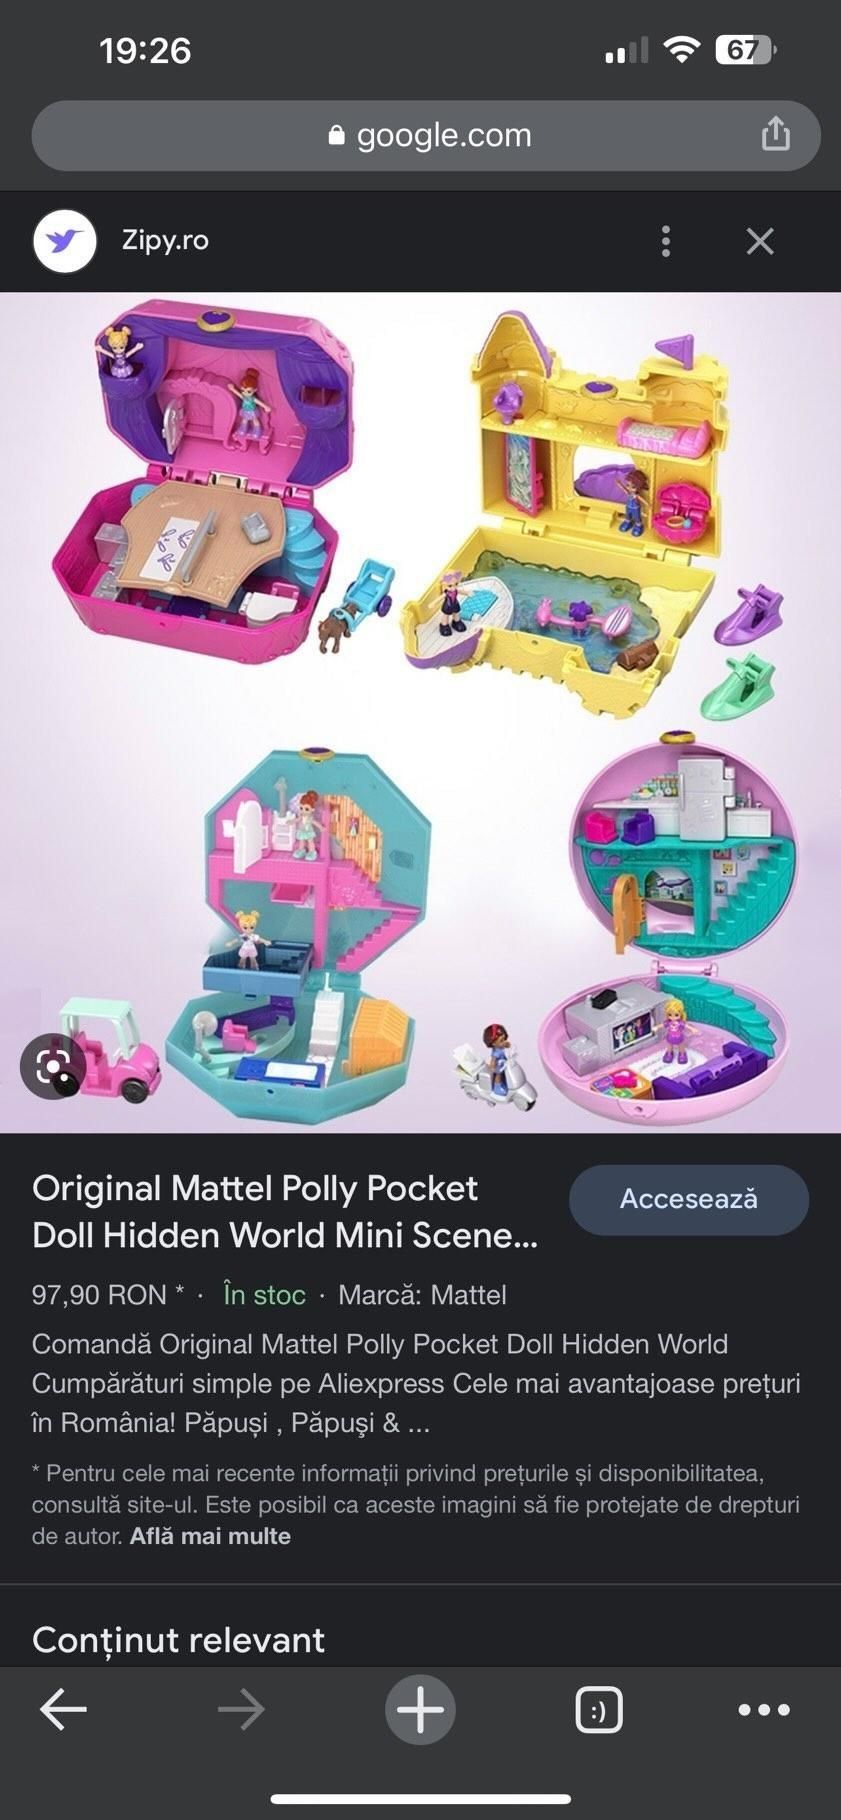 Polly pocket world mini scenes